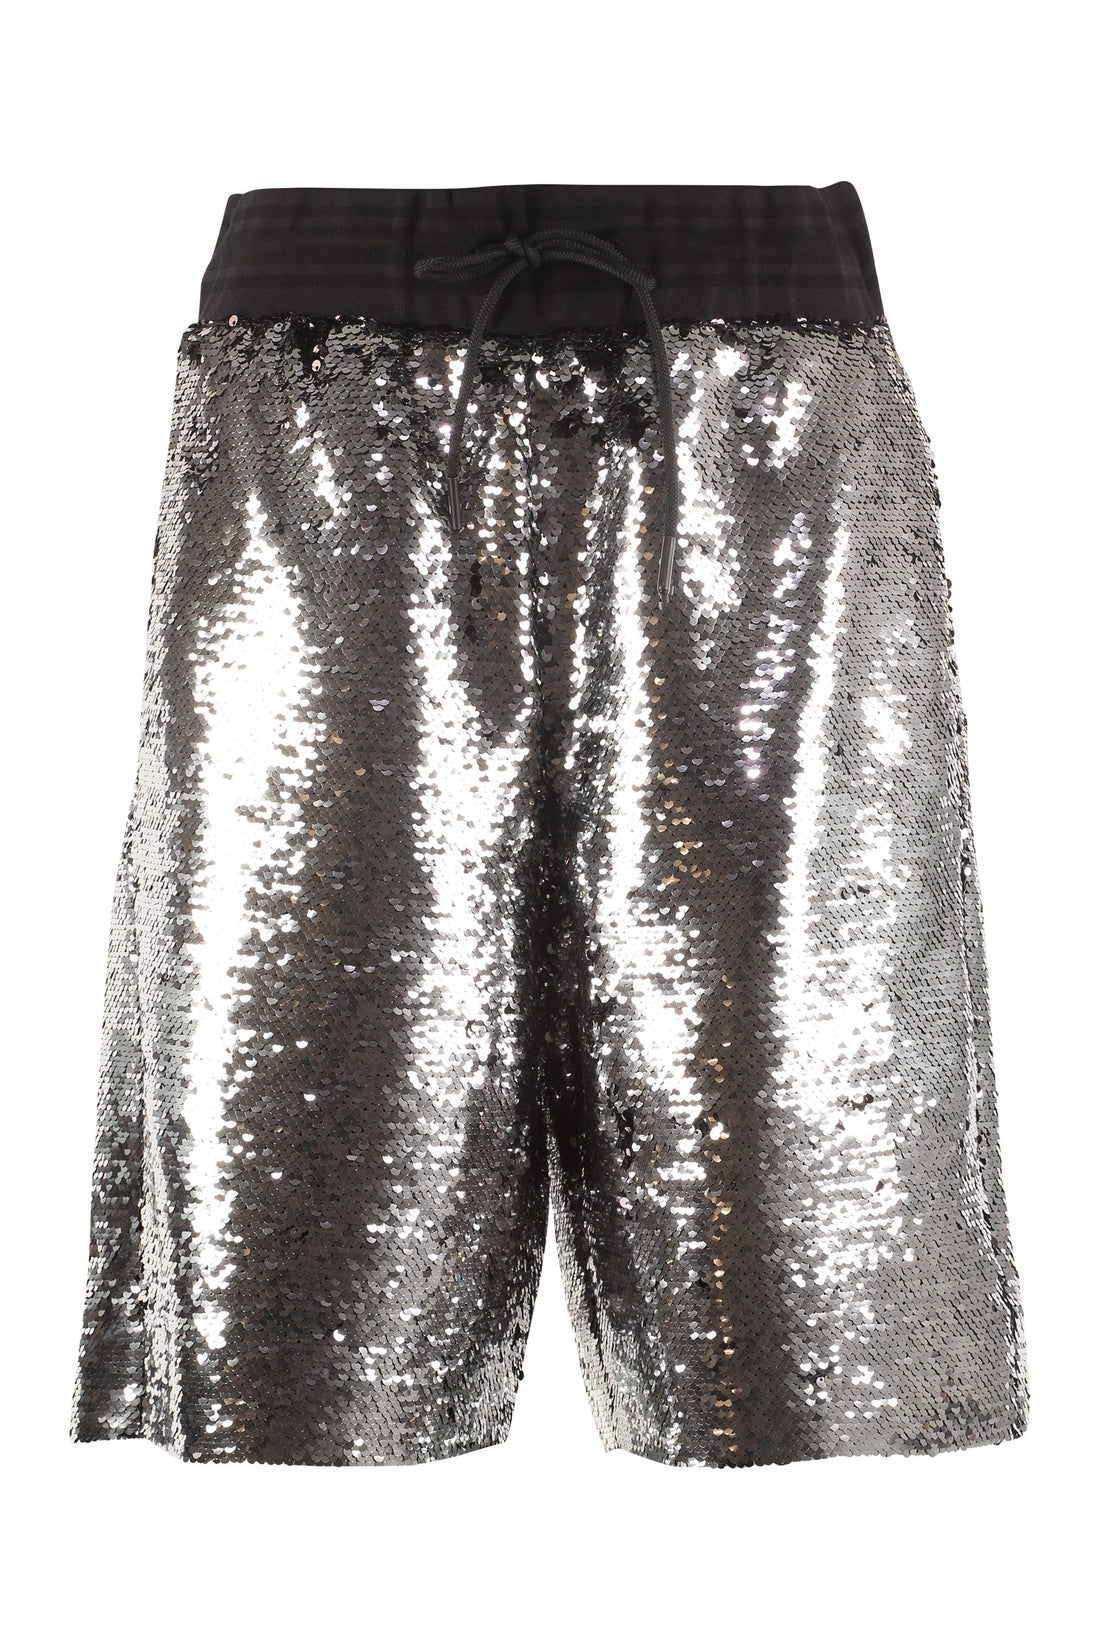 Golden Goose-OUTLET-SALE-Alyssa sequined shorts-ARCHIVIST